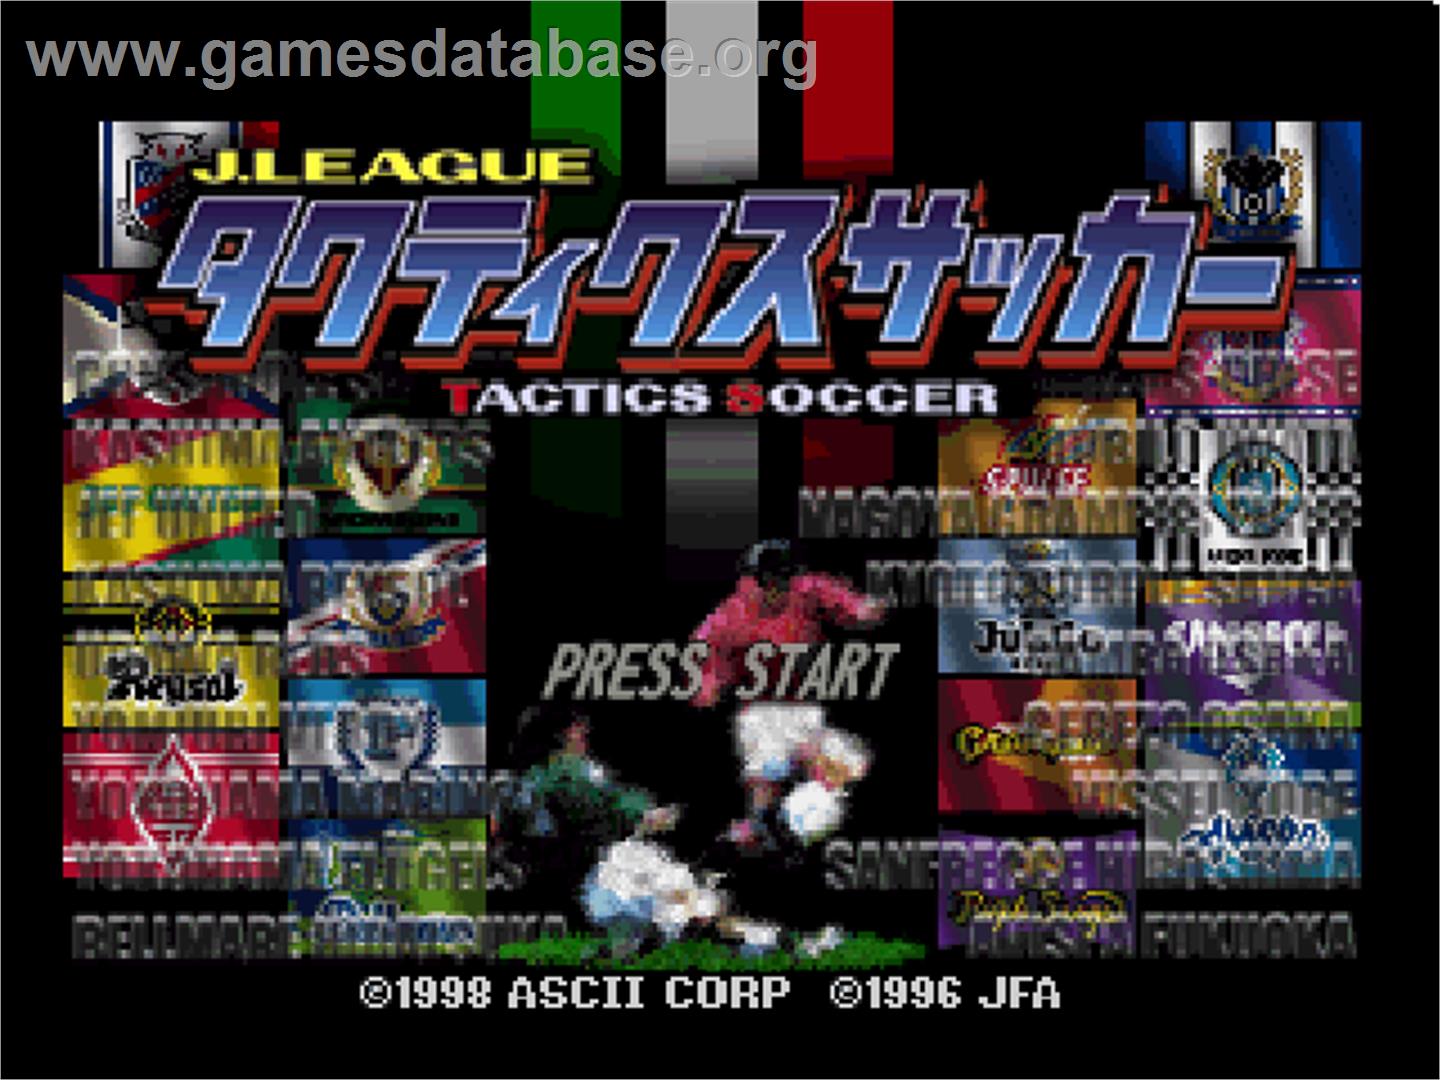 J-League Tactics Soccer - Nintendo N64 - Artwork - Title Screen